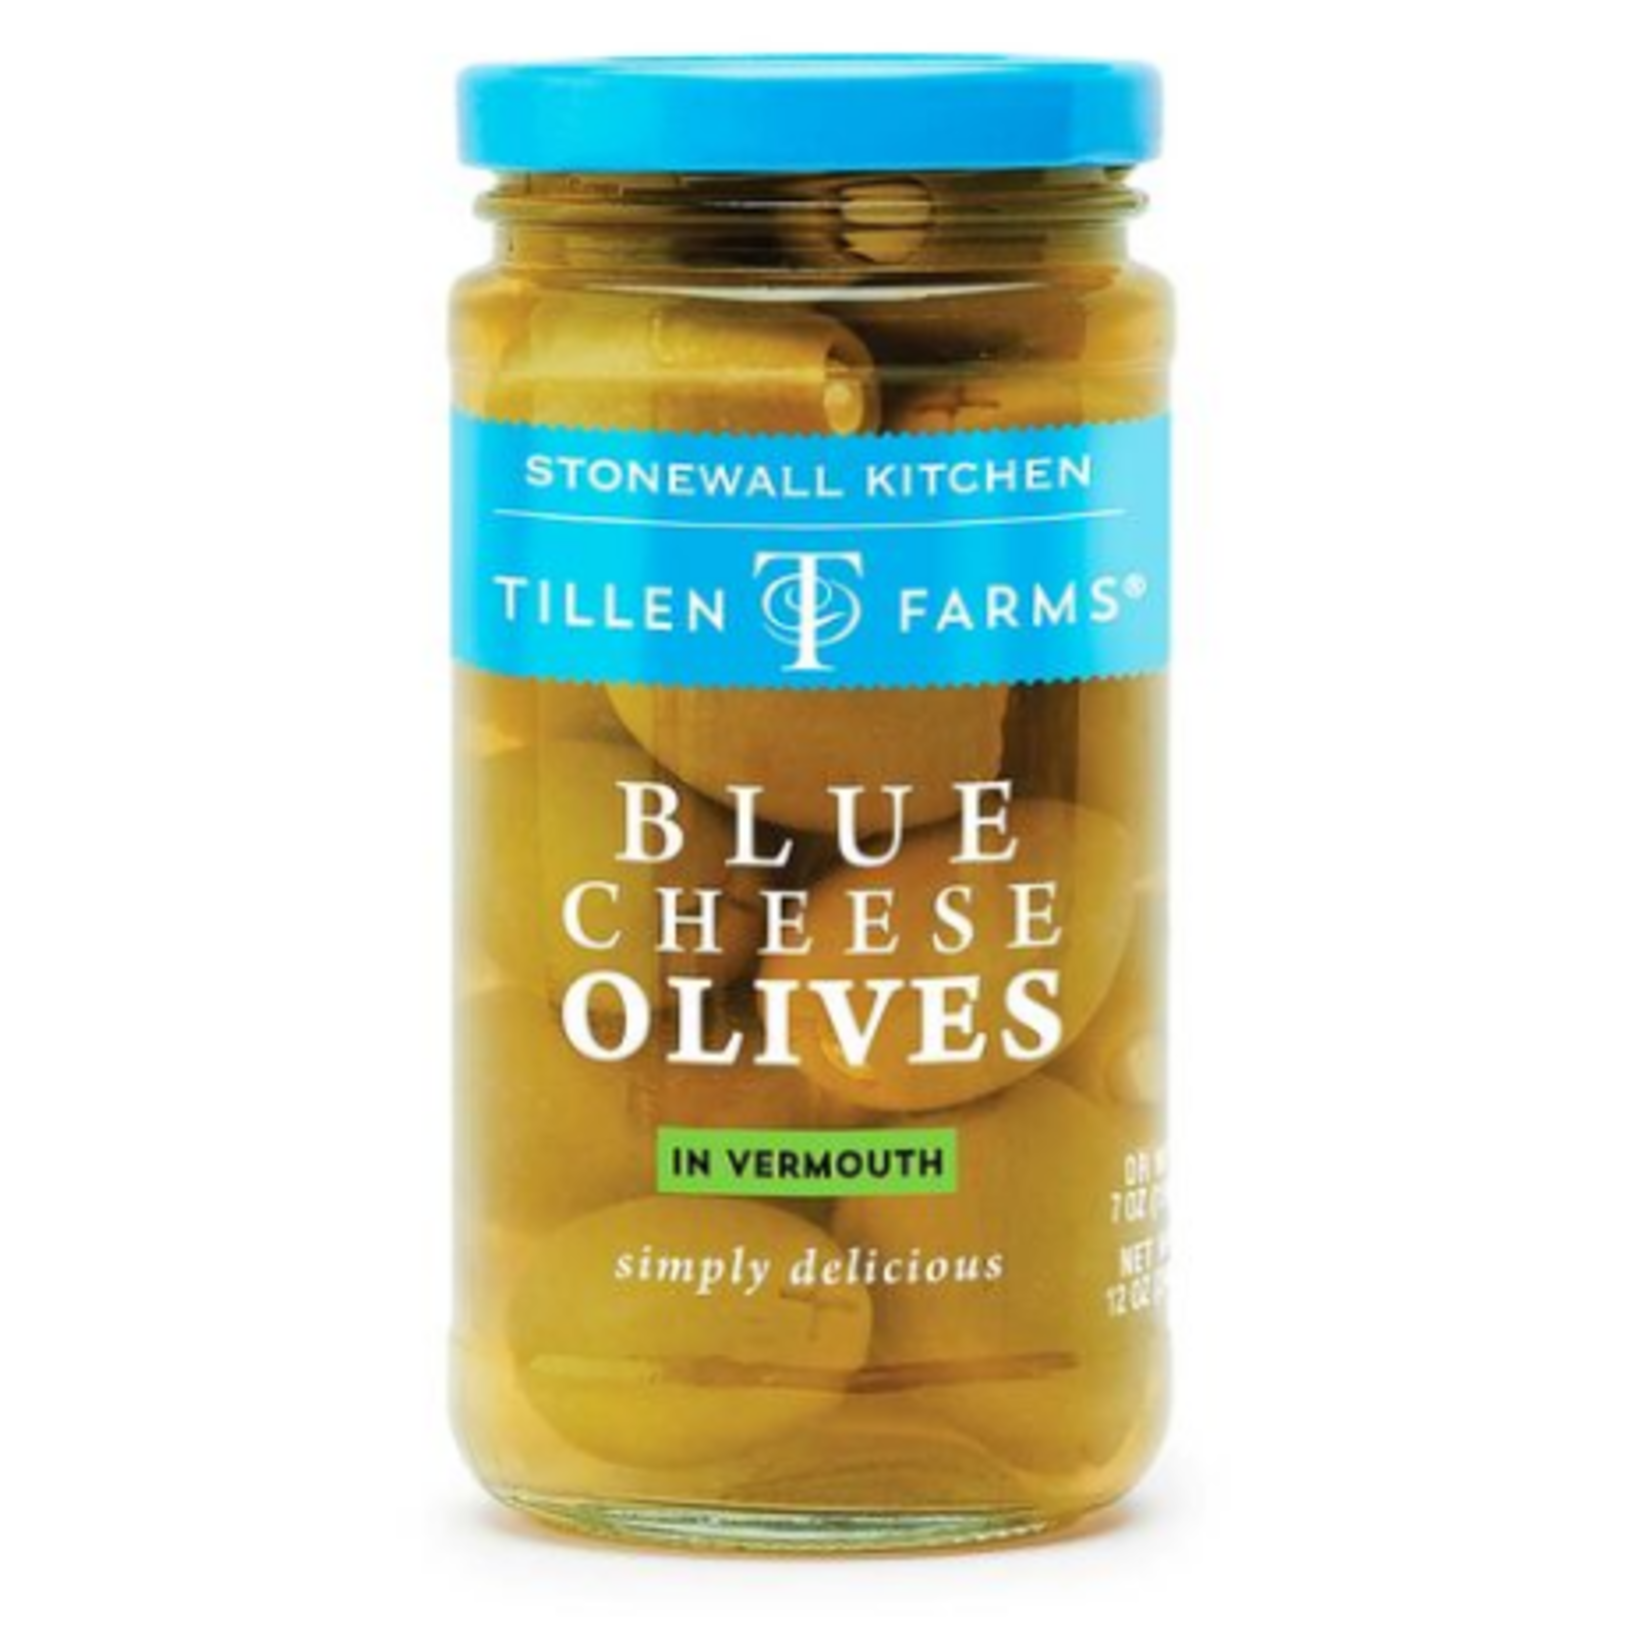 Stonewall Kitchen Tillen Farms Blue Cheese Olives